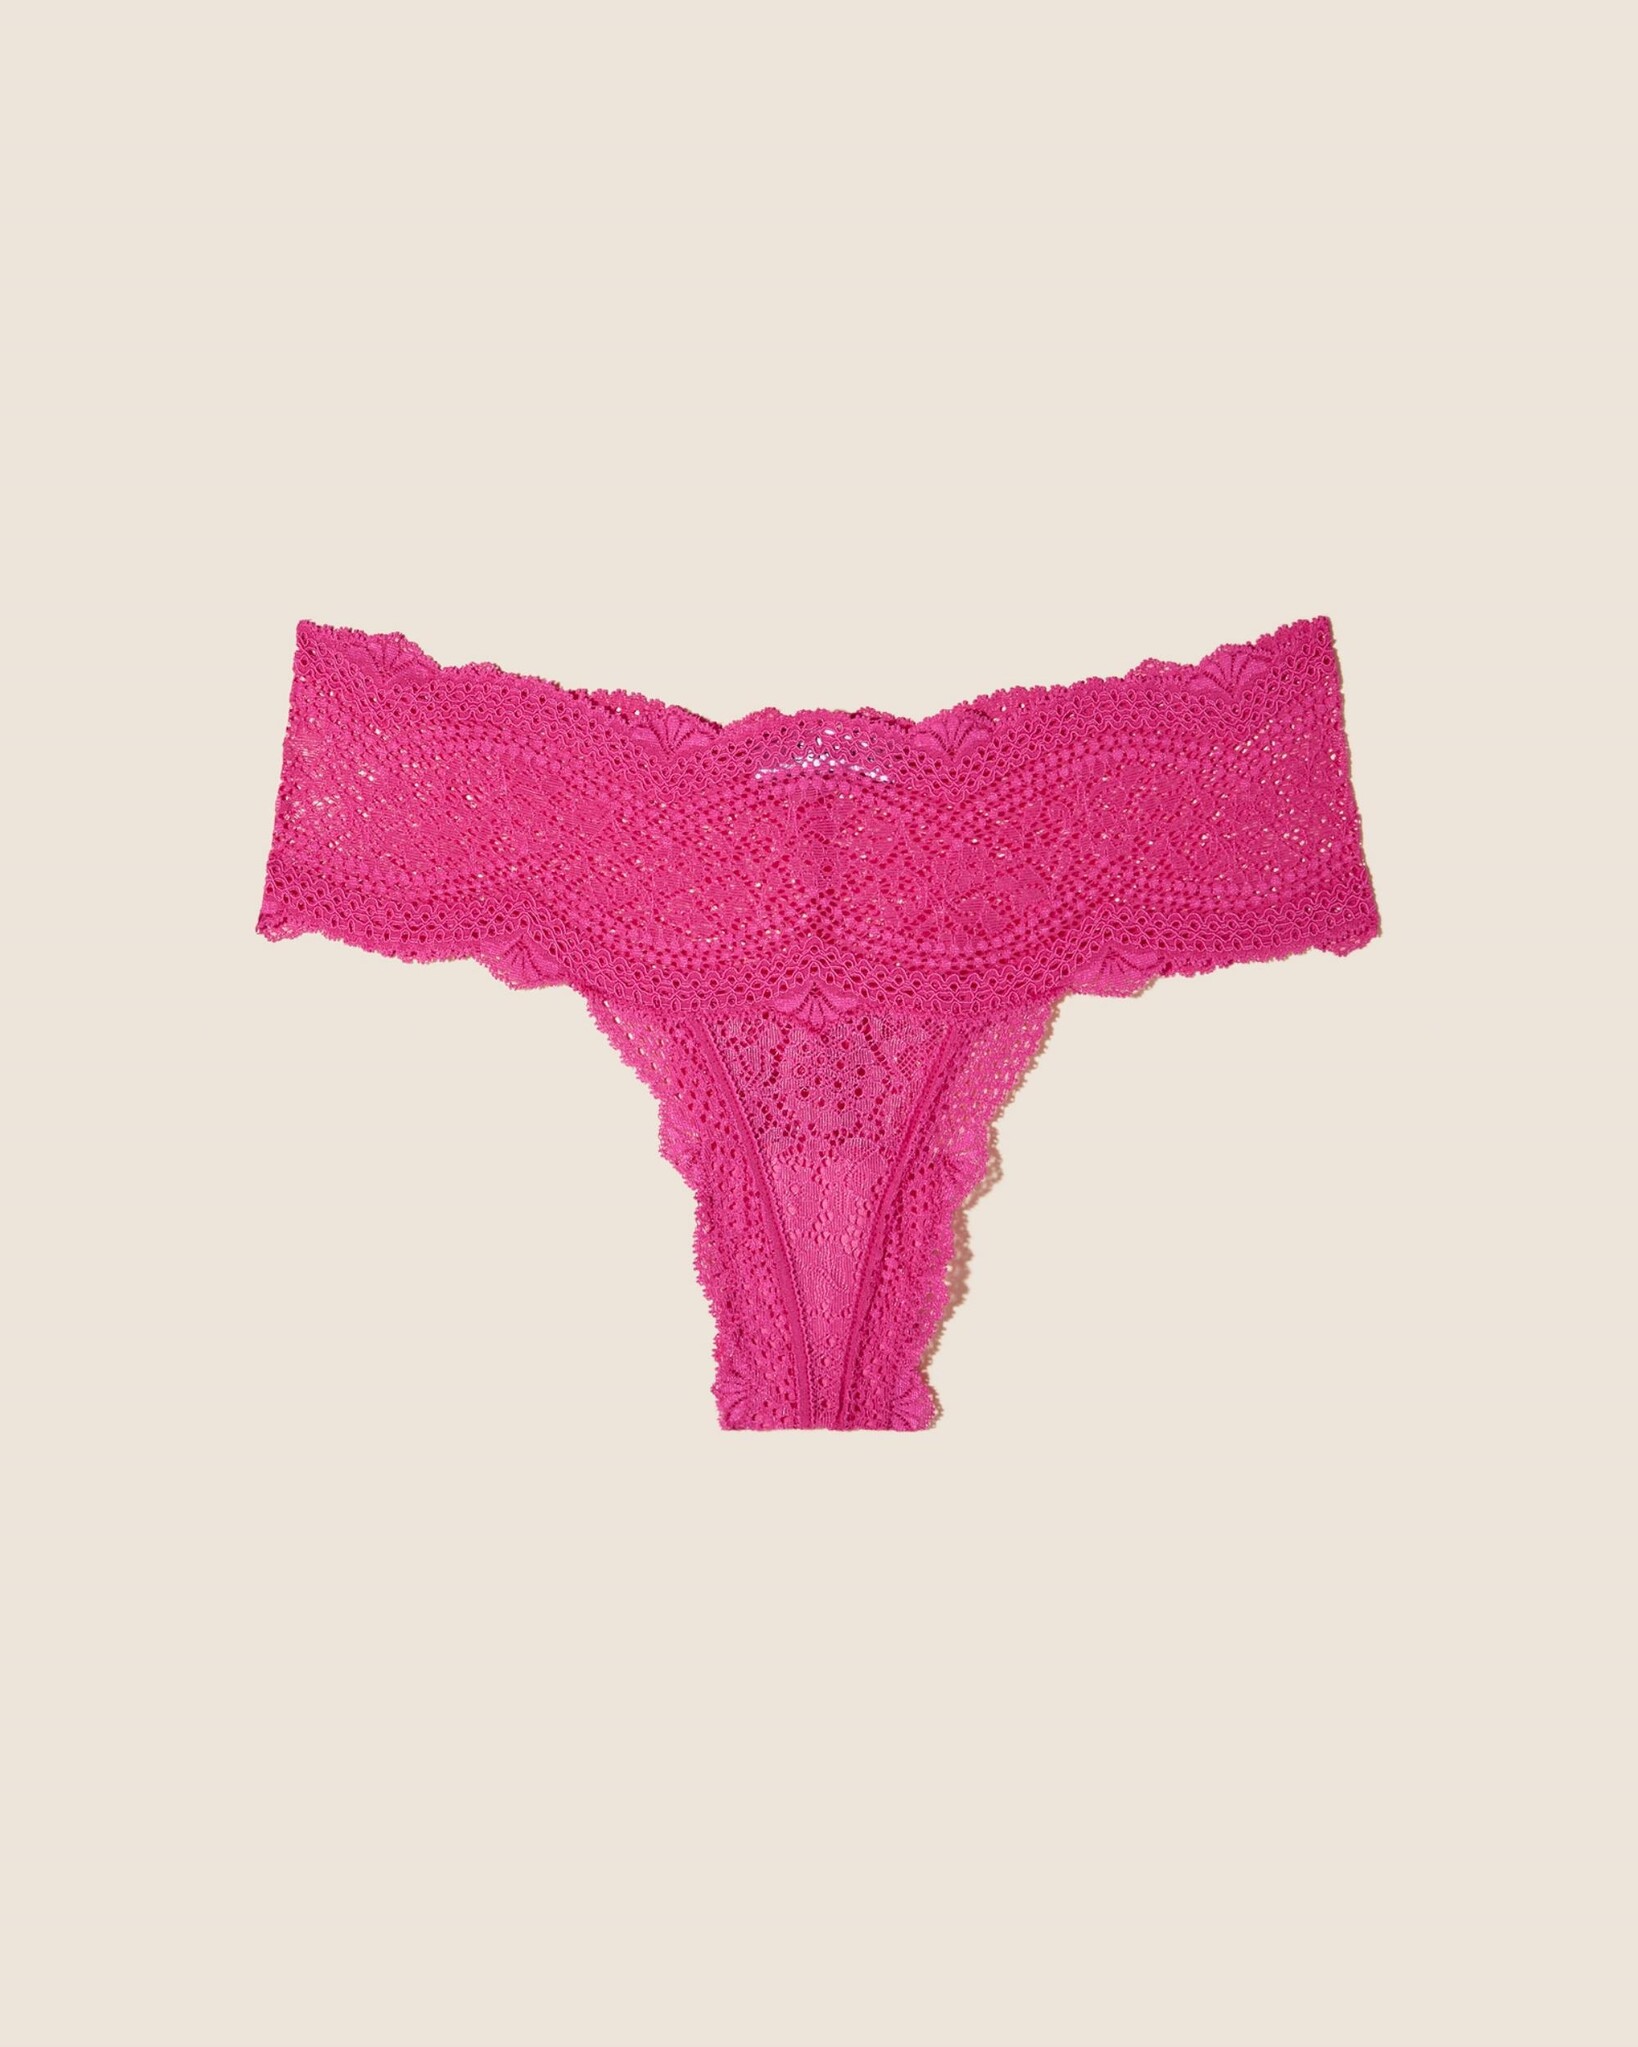 PINK Victoria's Secret, Intimates & Sleepwear, Pink Sports Bra Size Large